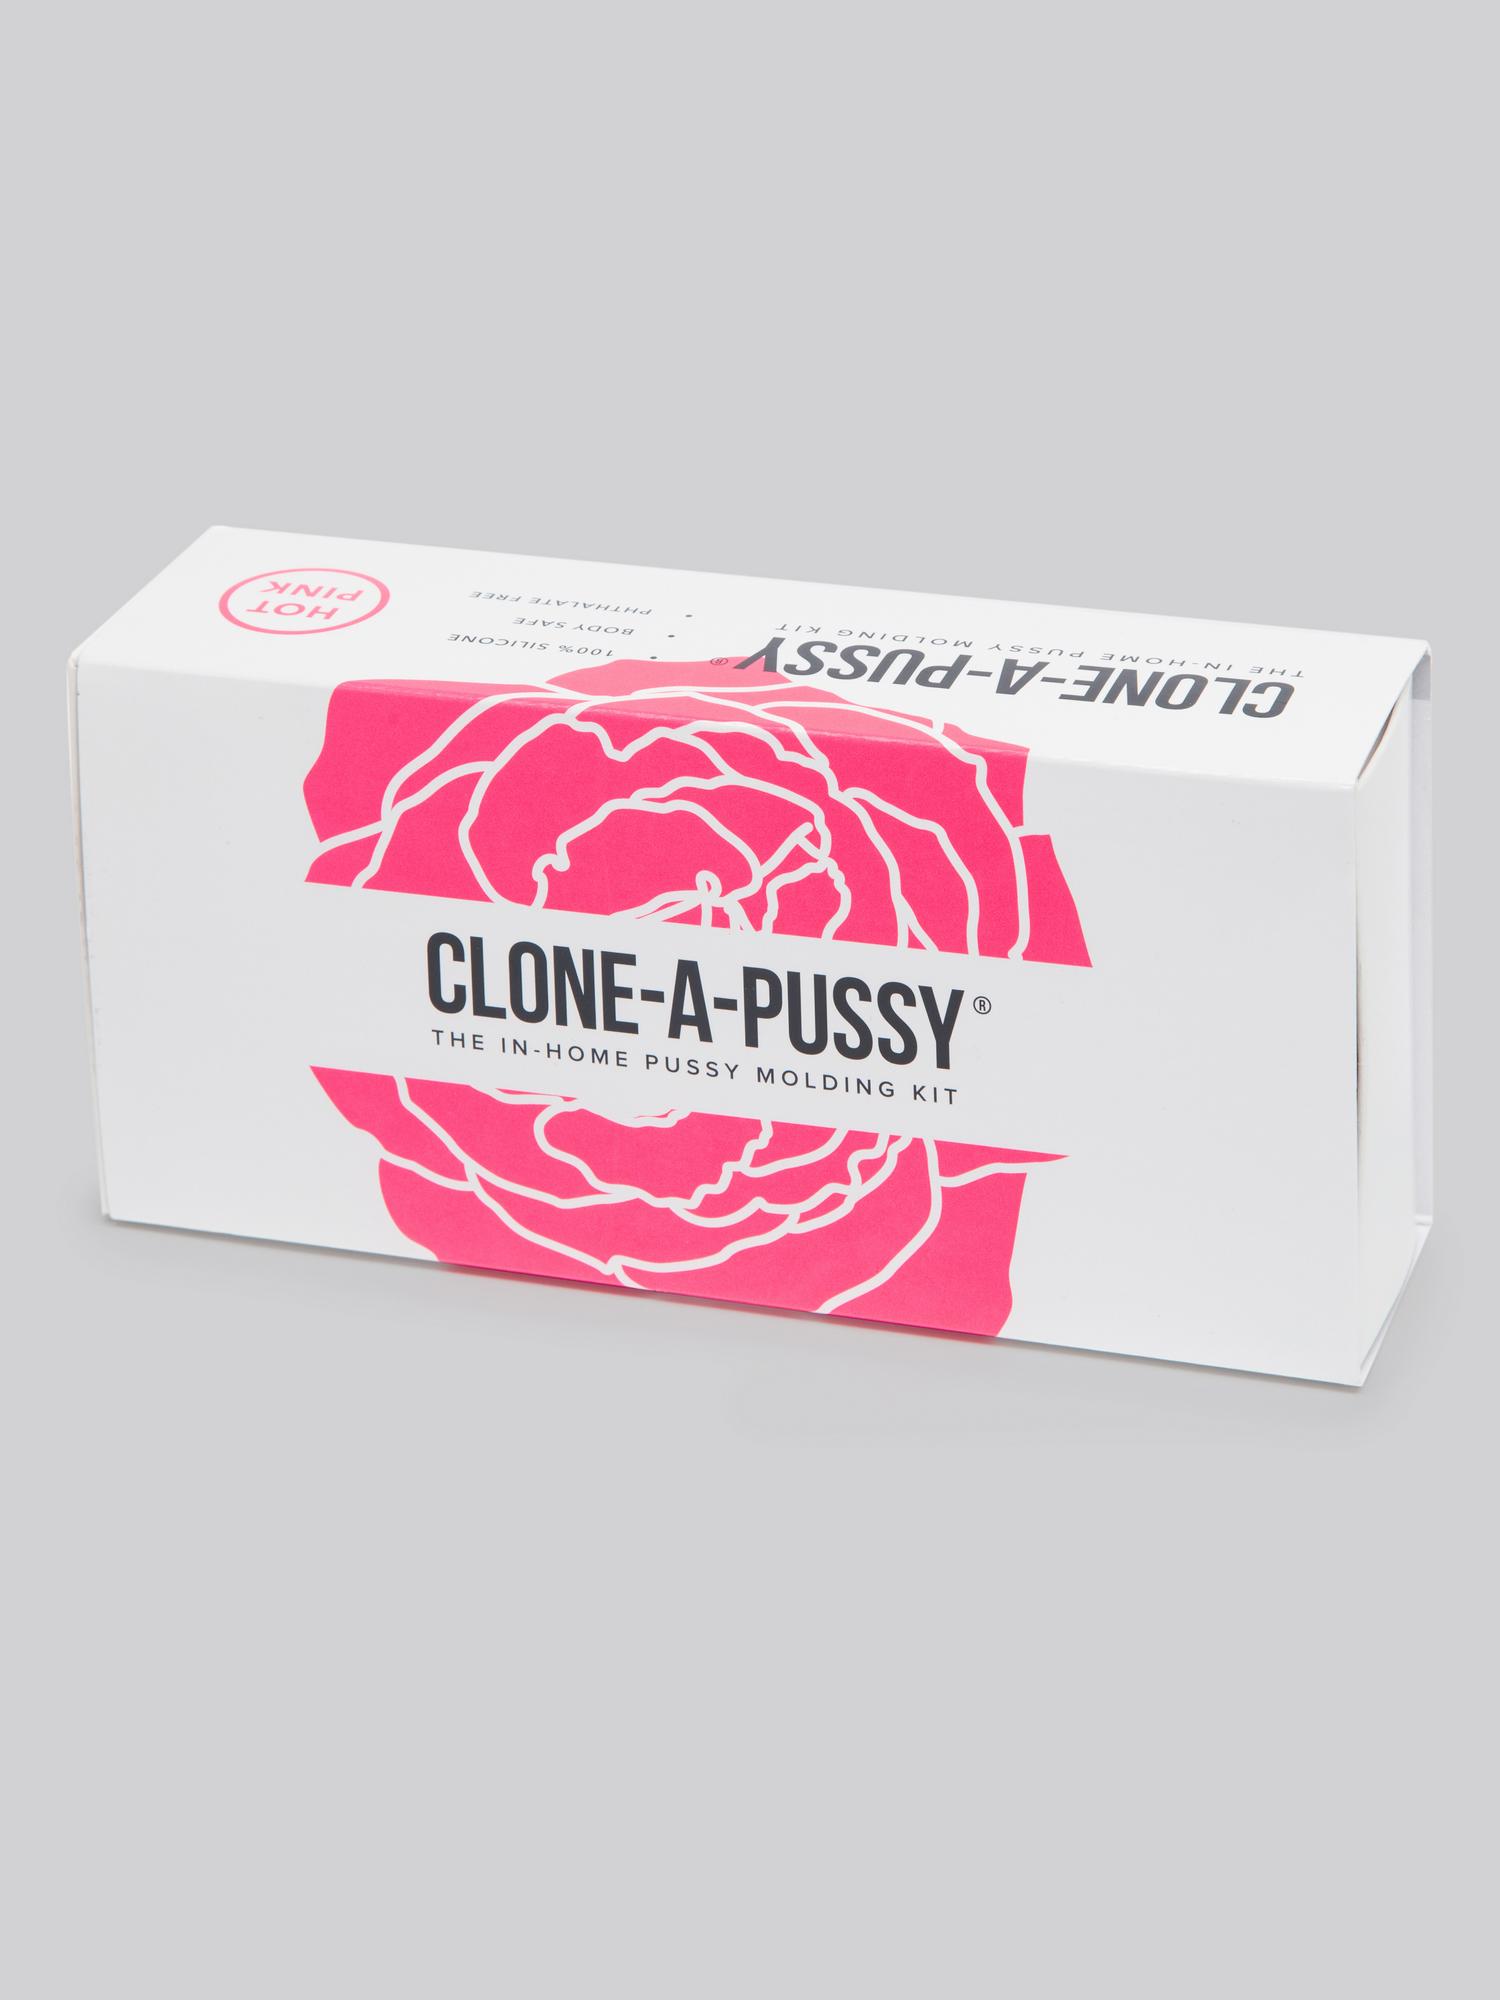 Clone-A-Pussy Female Molding Kit. Slide 13